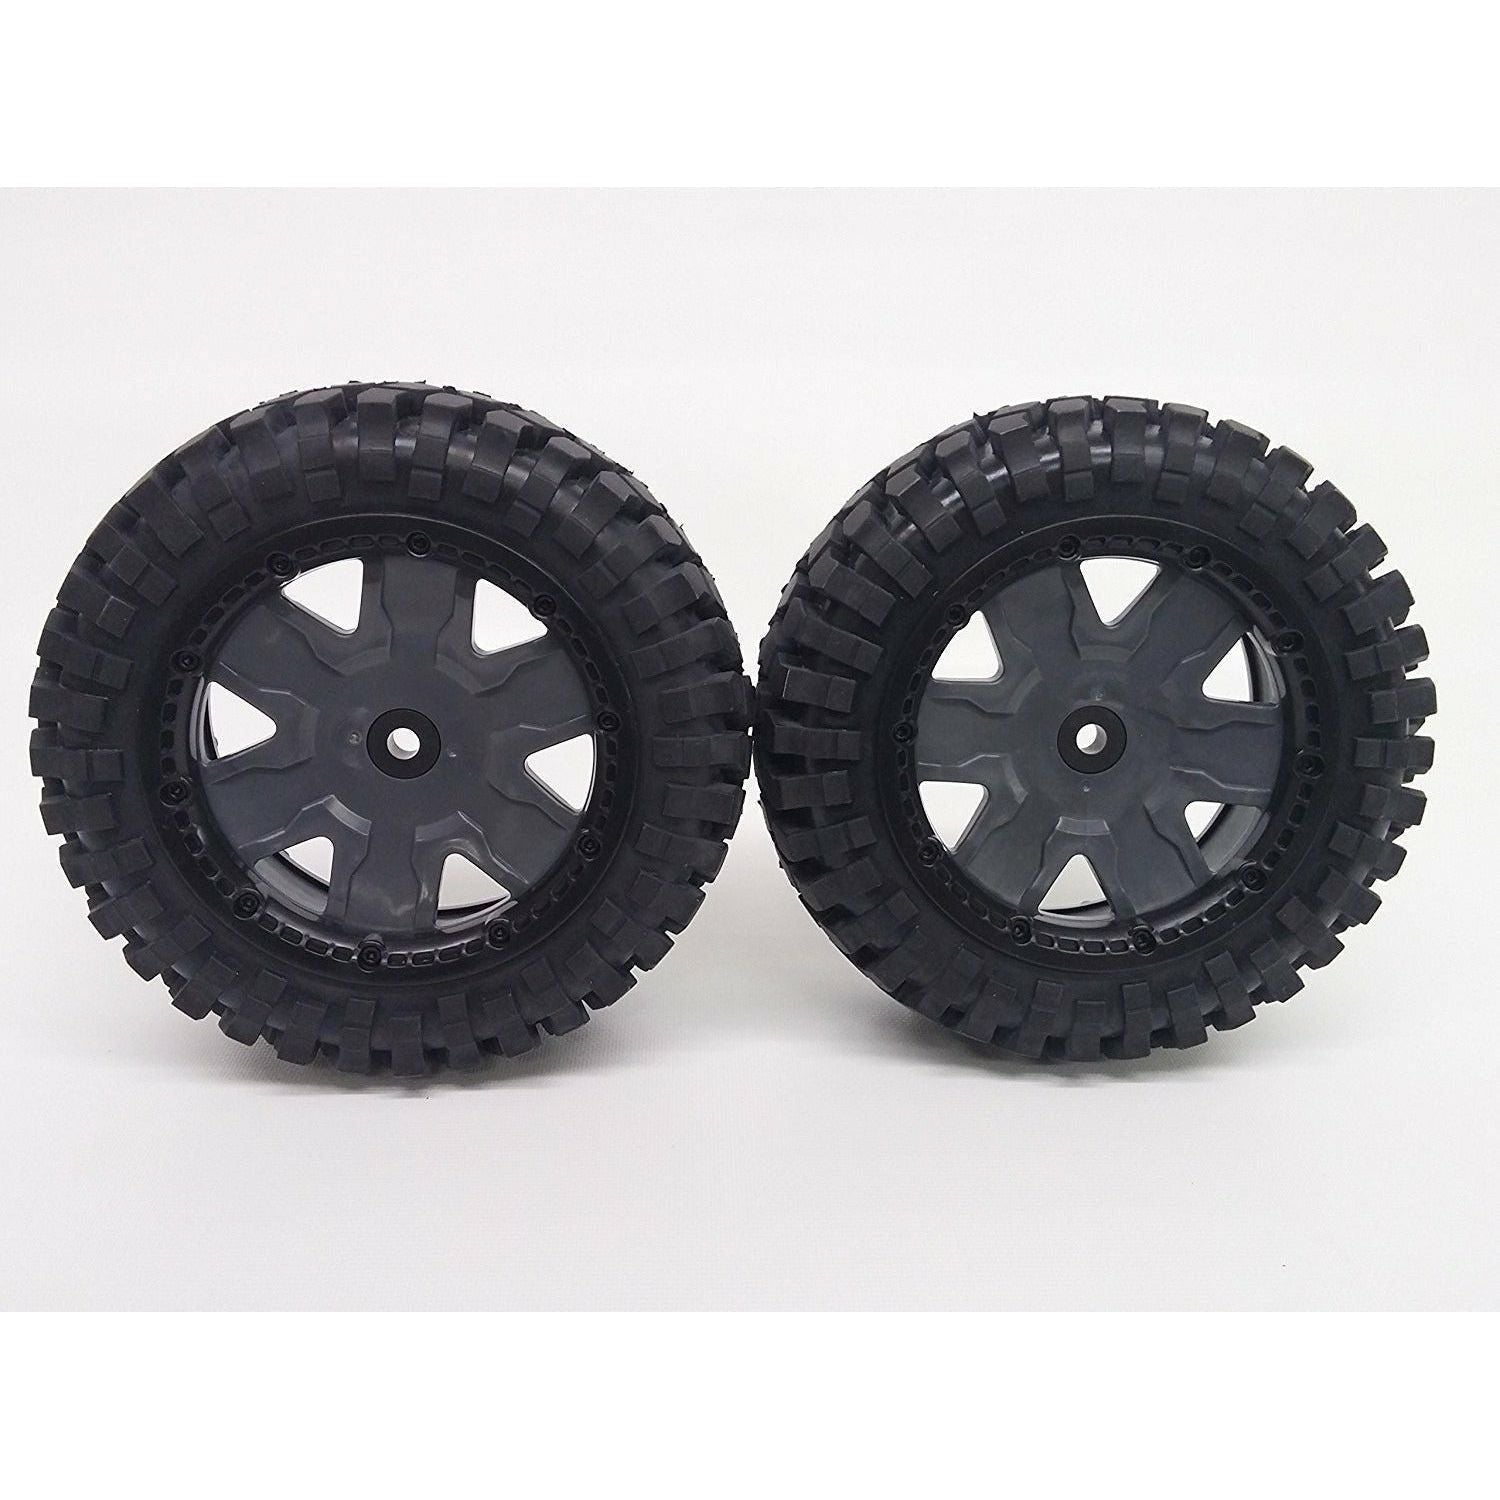 K-Rock Tires & Yuma Rims with Beadlocks - Front (1 Pair) (Choose Color)